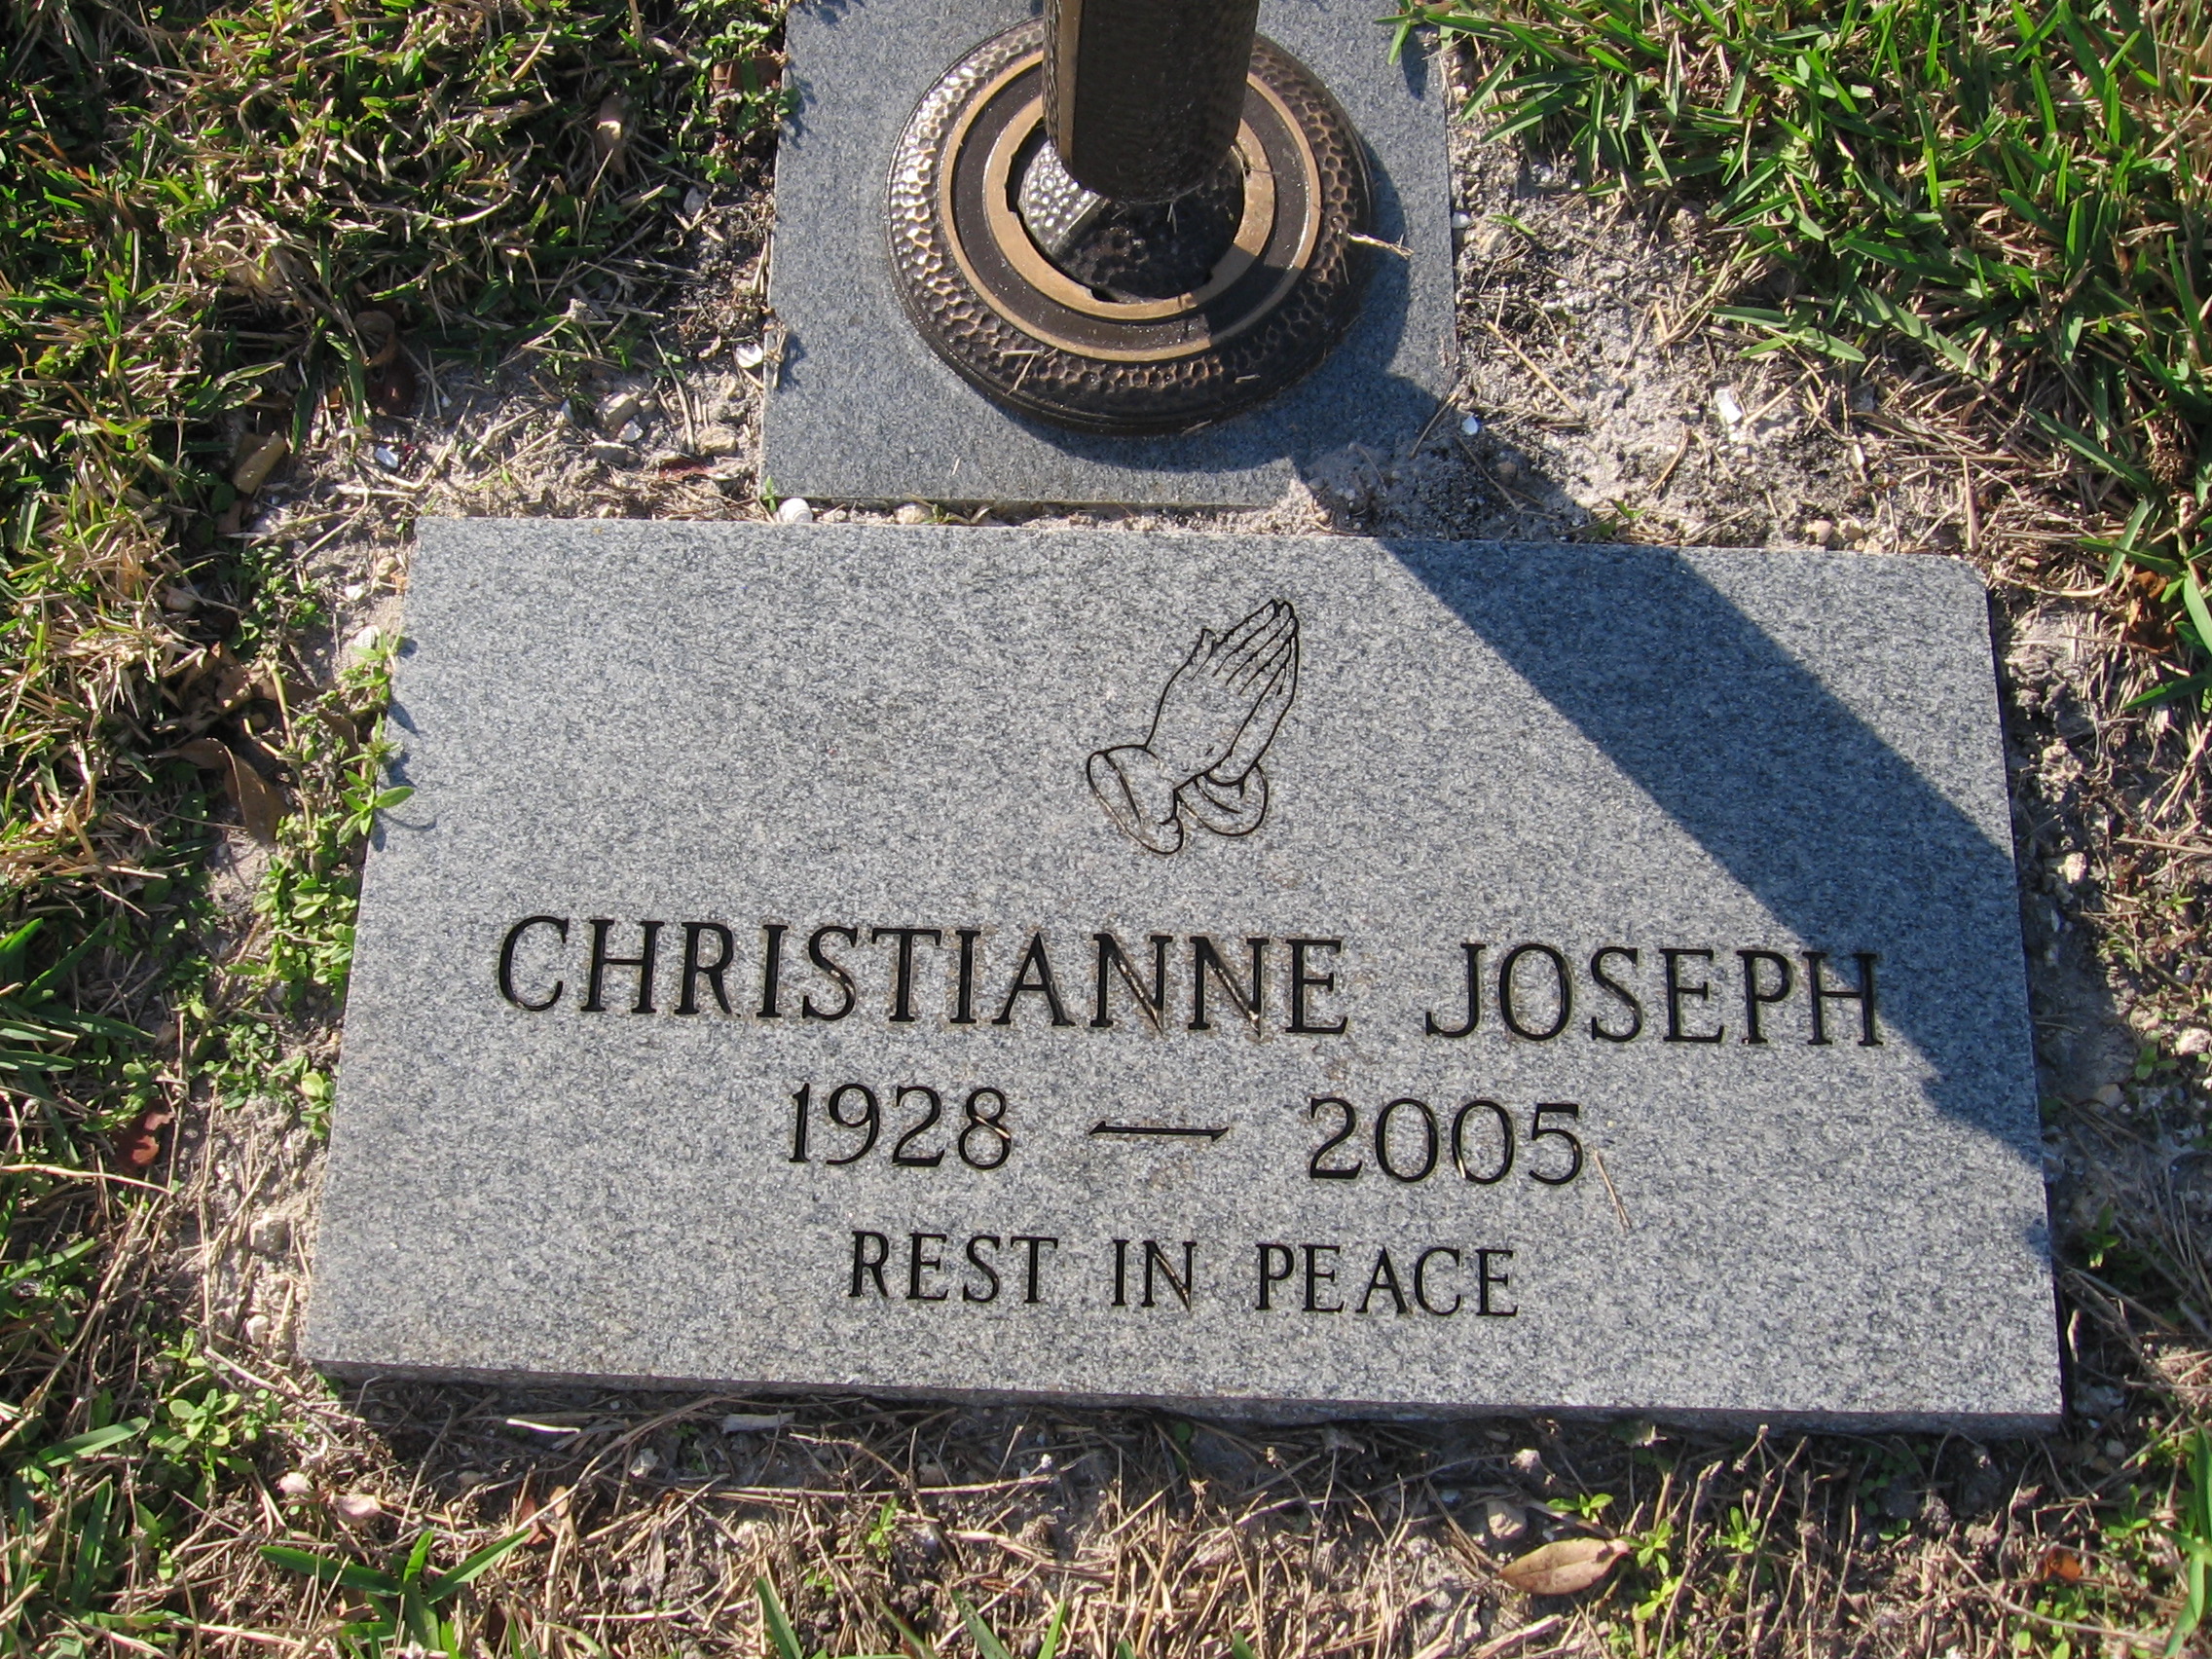 Christianne Joseph